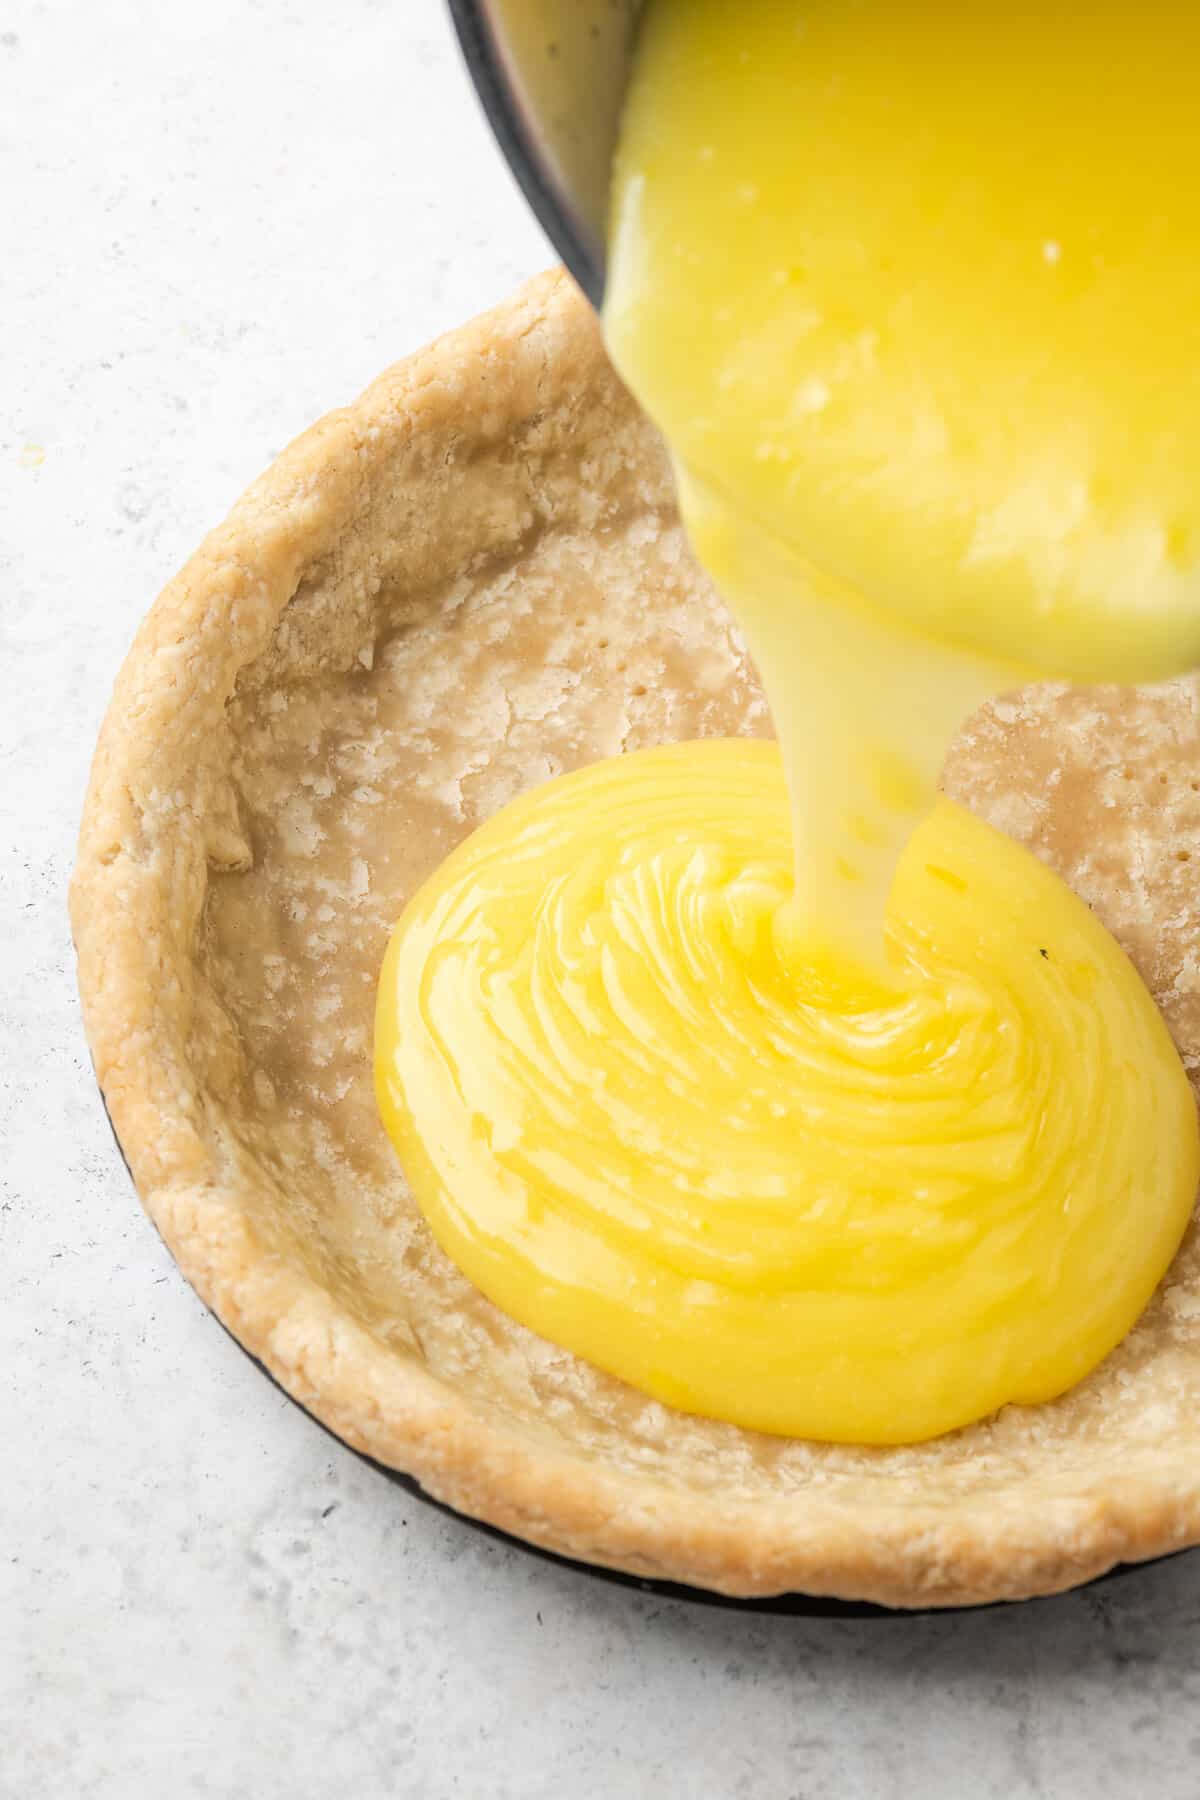 Lemon filling is poured into a pie crust to make gluten free lemon meringue pie.